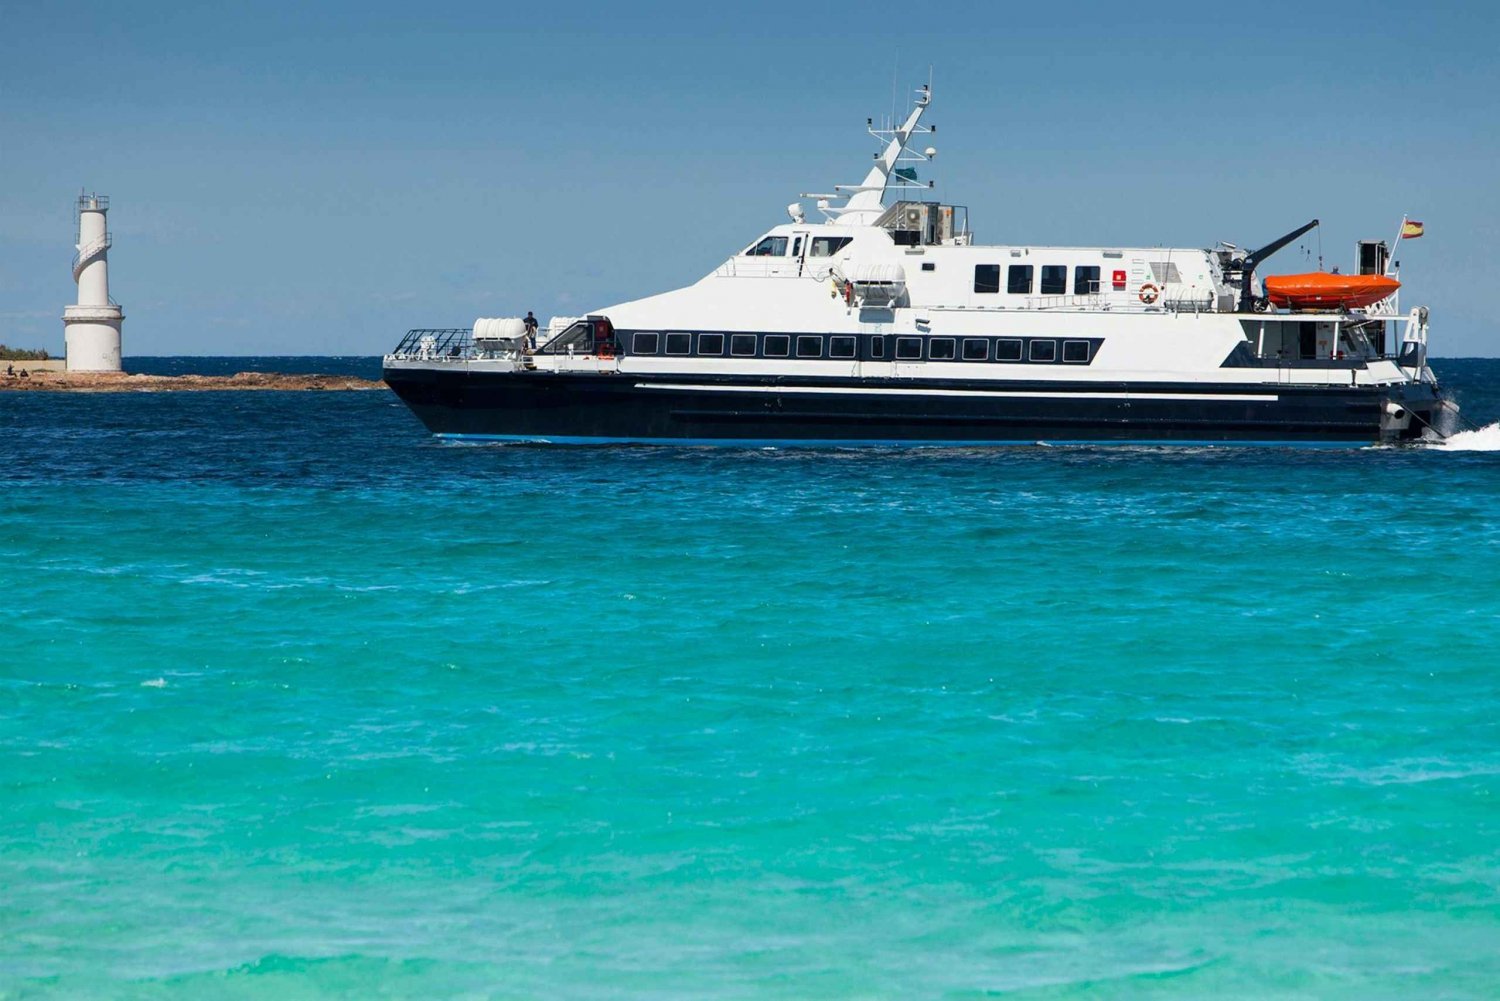 Transfert aller-retour en ferry entre Ibiza et Formentera